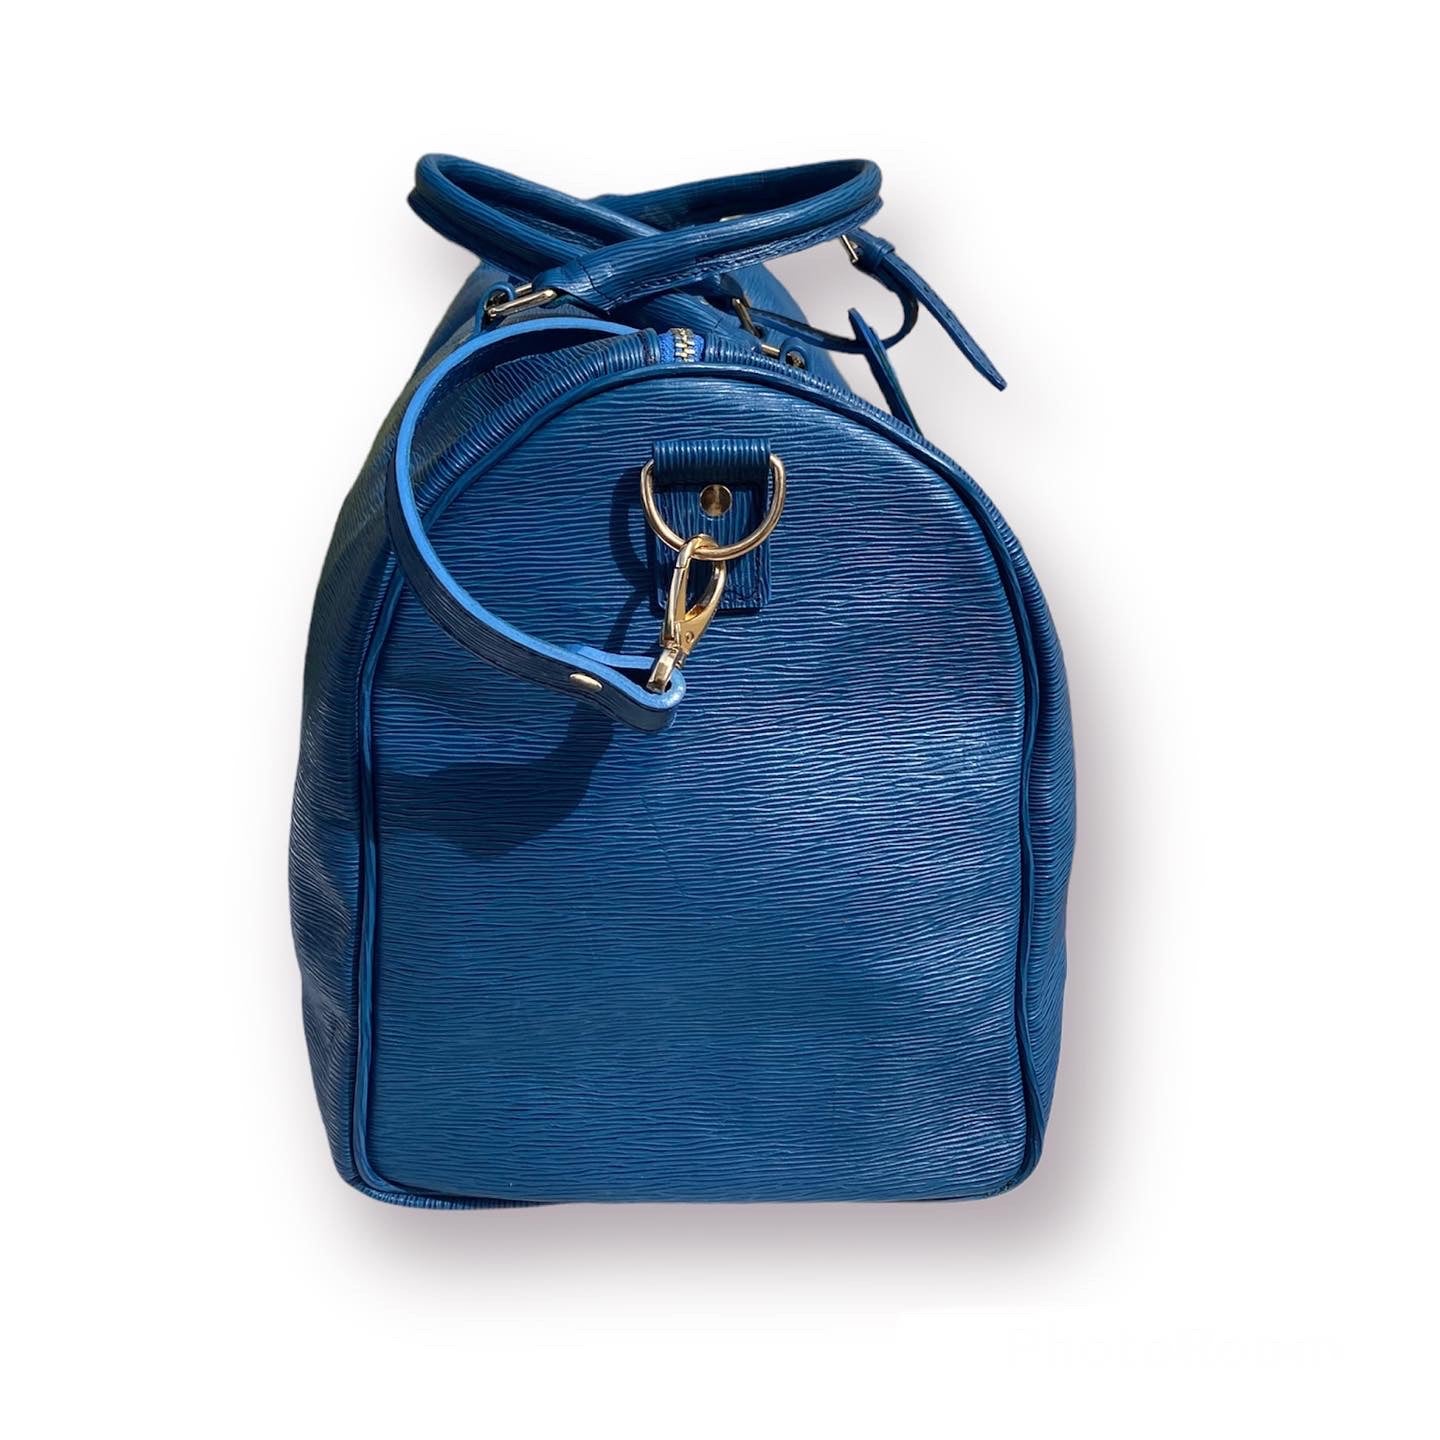 Duffle bag blue